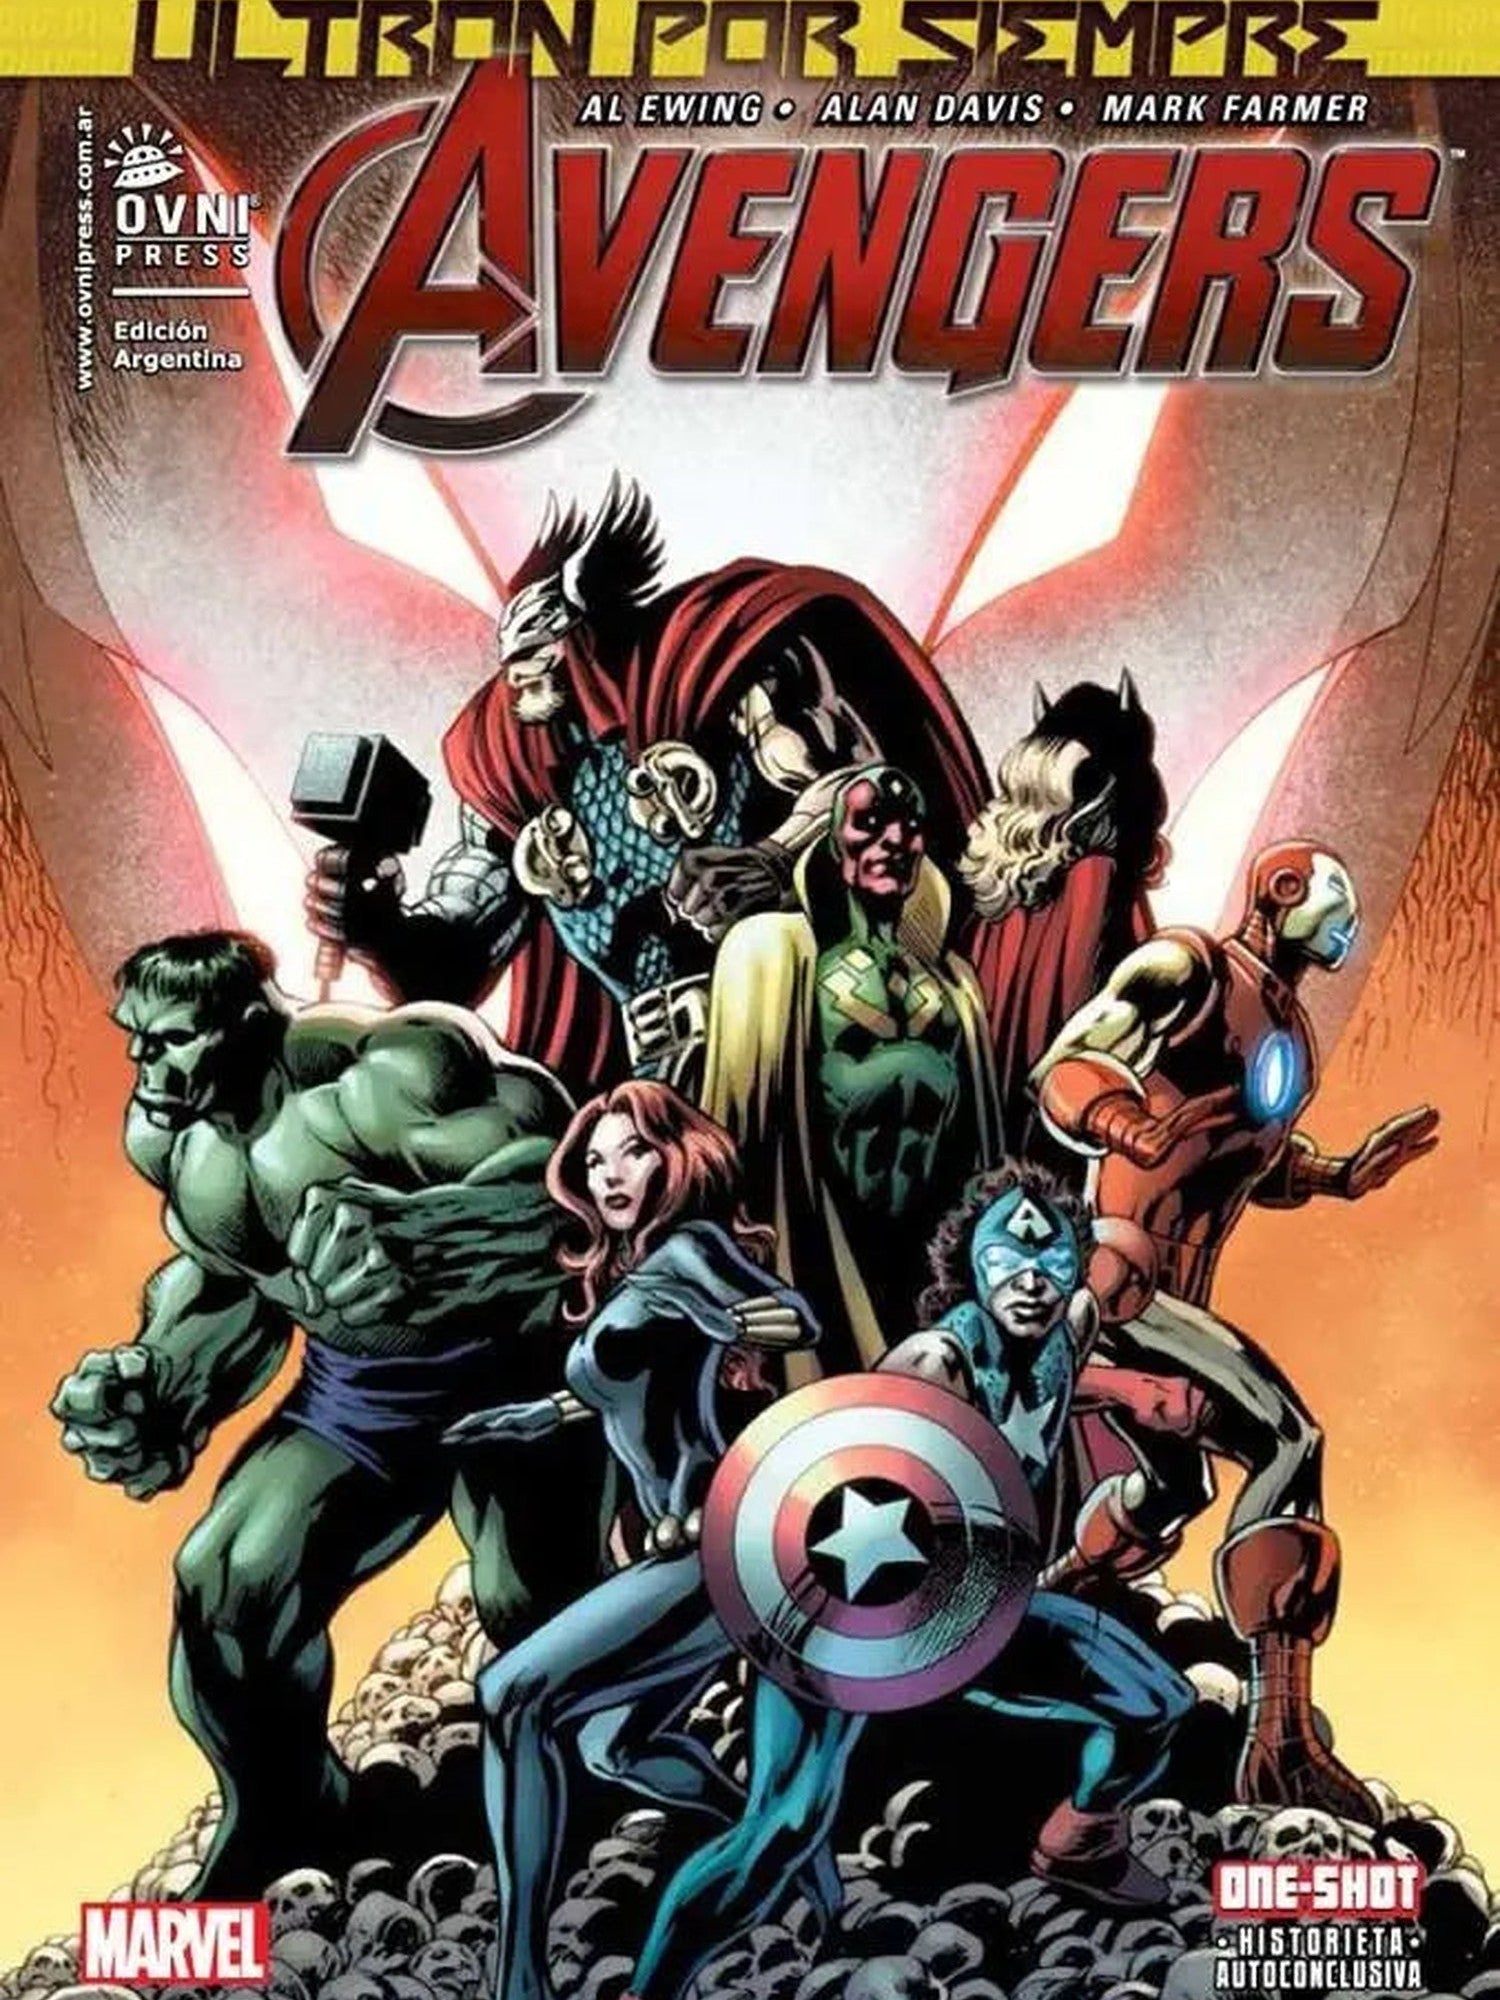 Avengers: Ultrón por Siempre OVNI Press ENcuadrocomics